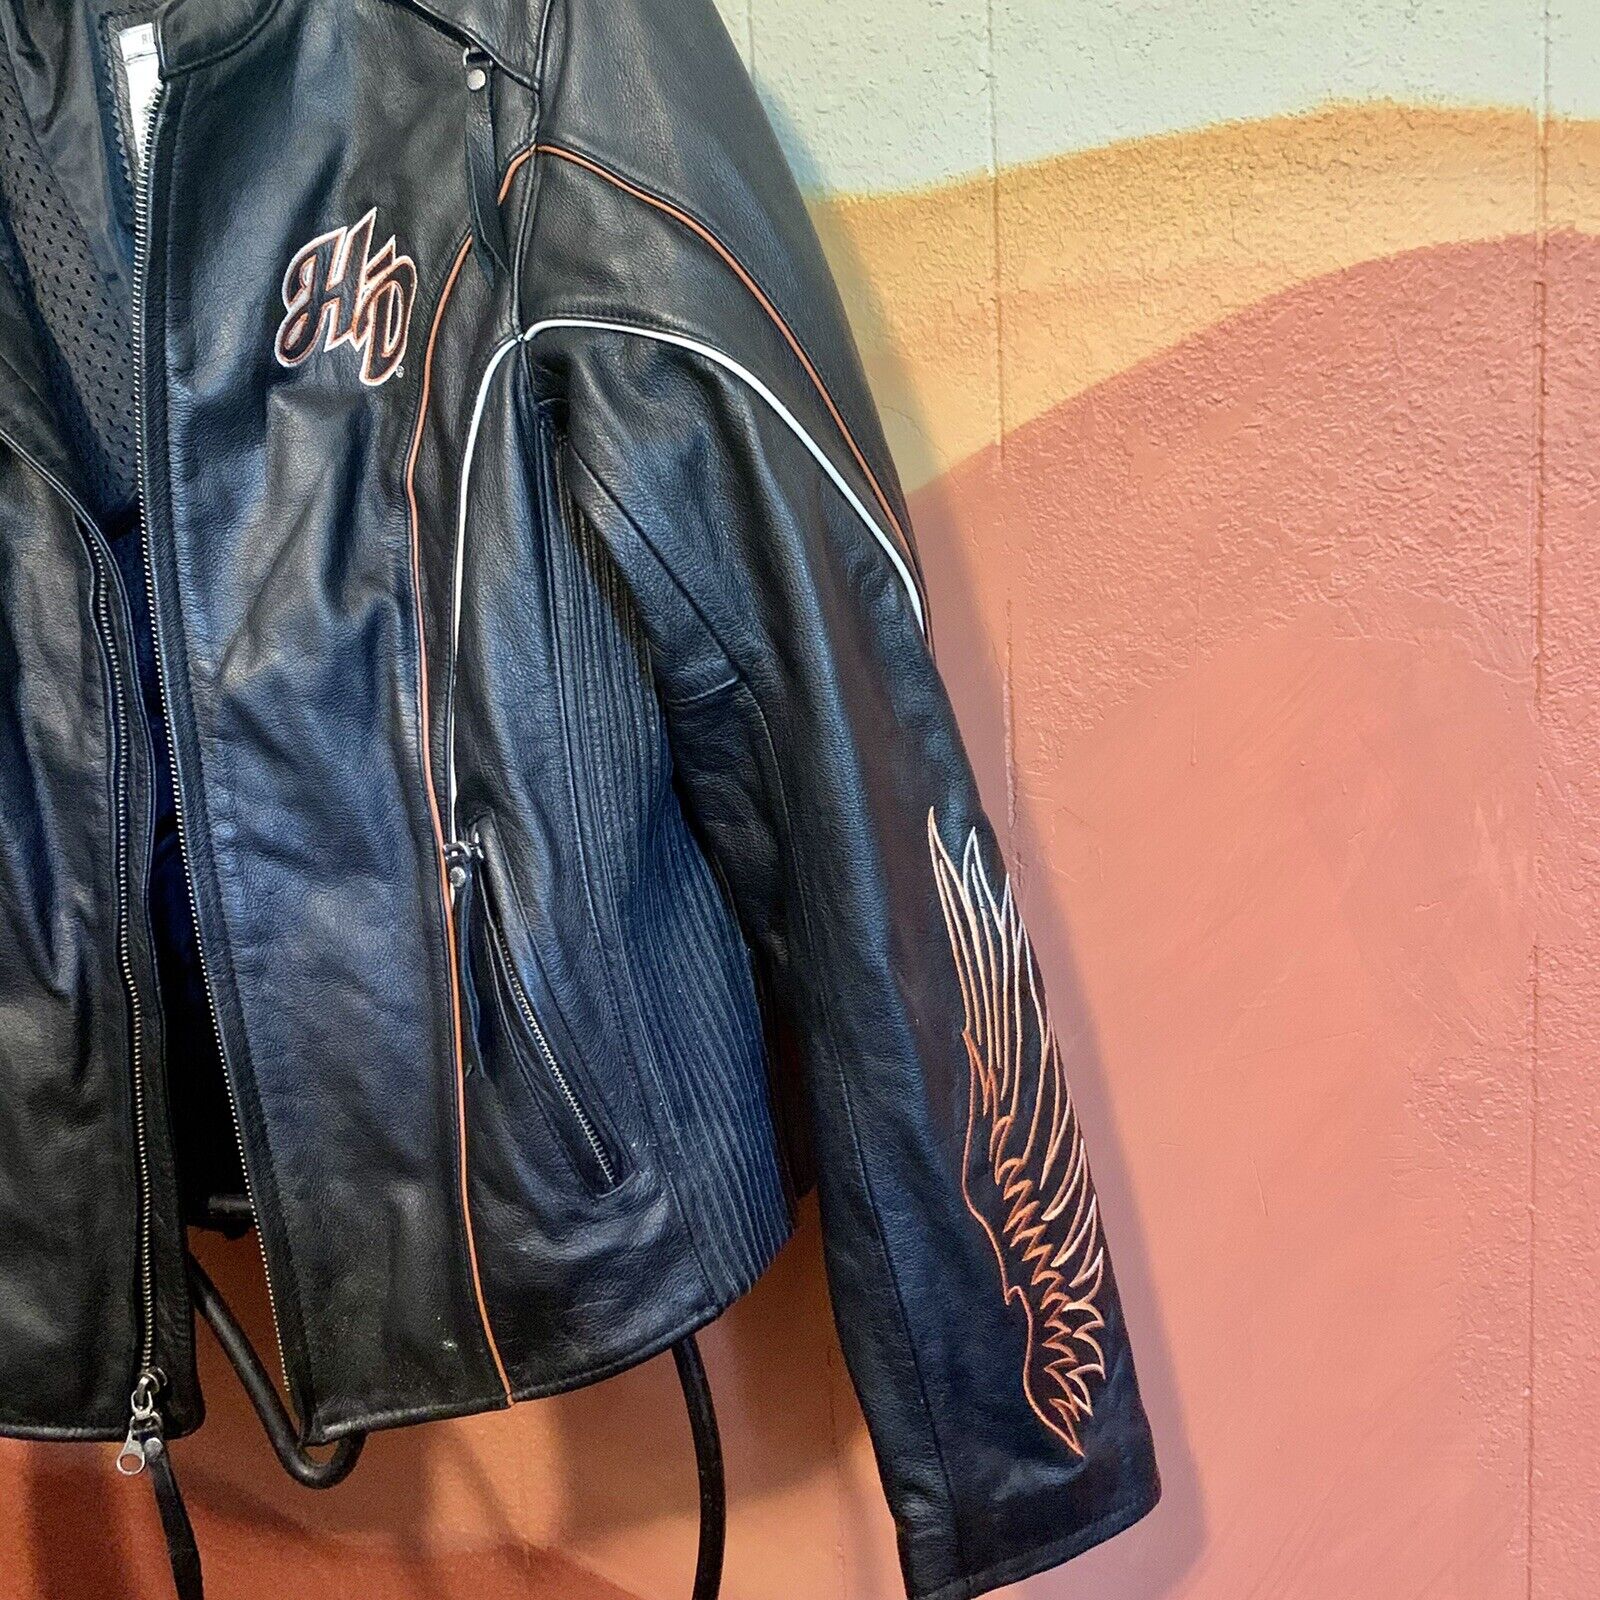 Harley Davidson Embroidered Leather Moto Jacket S | eBay